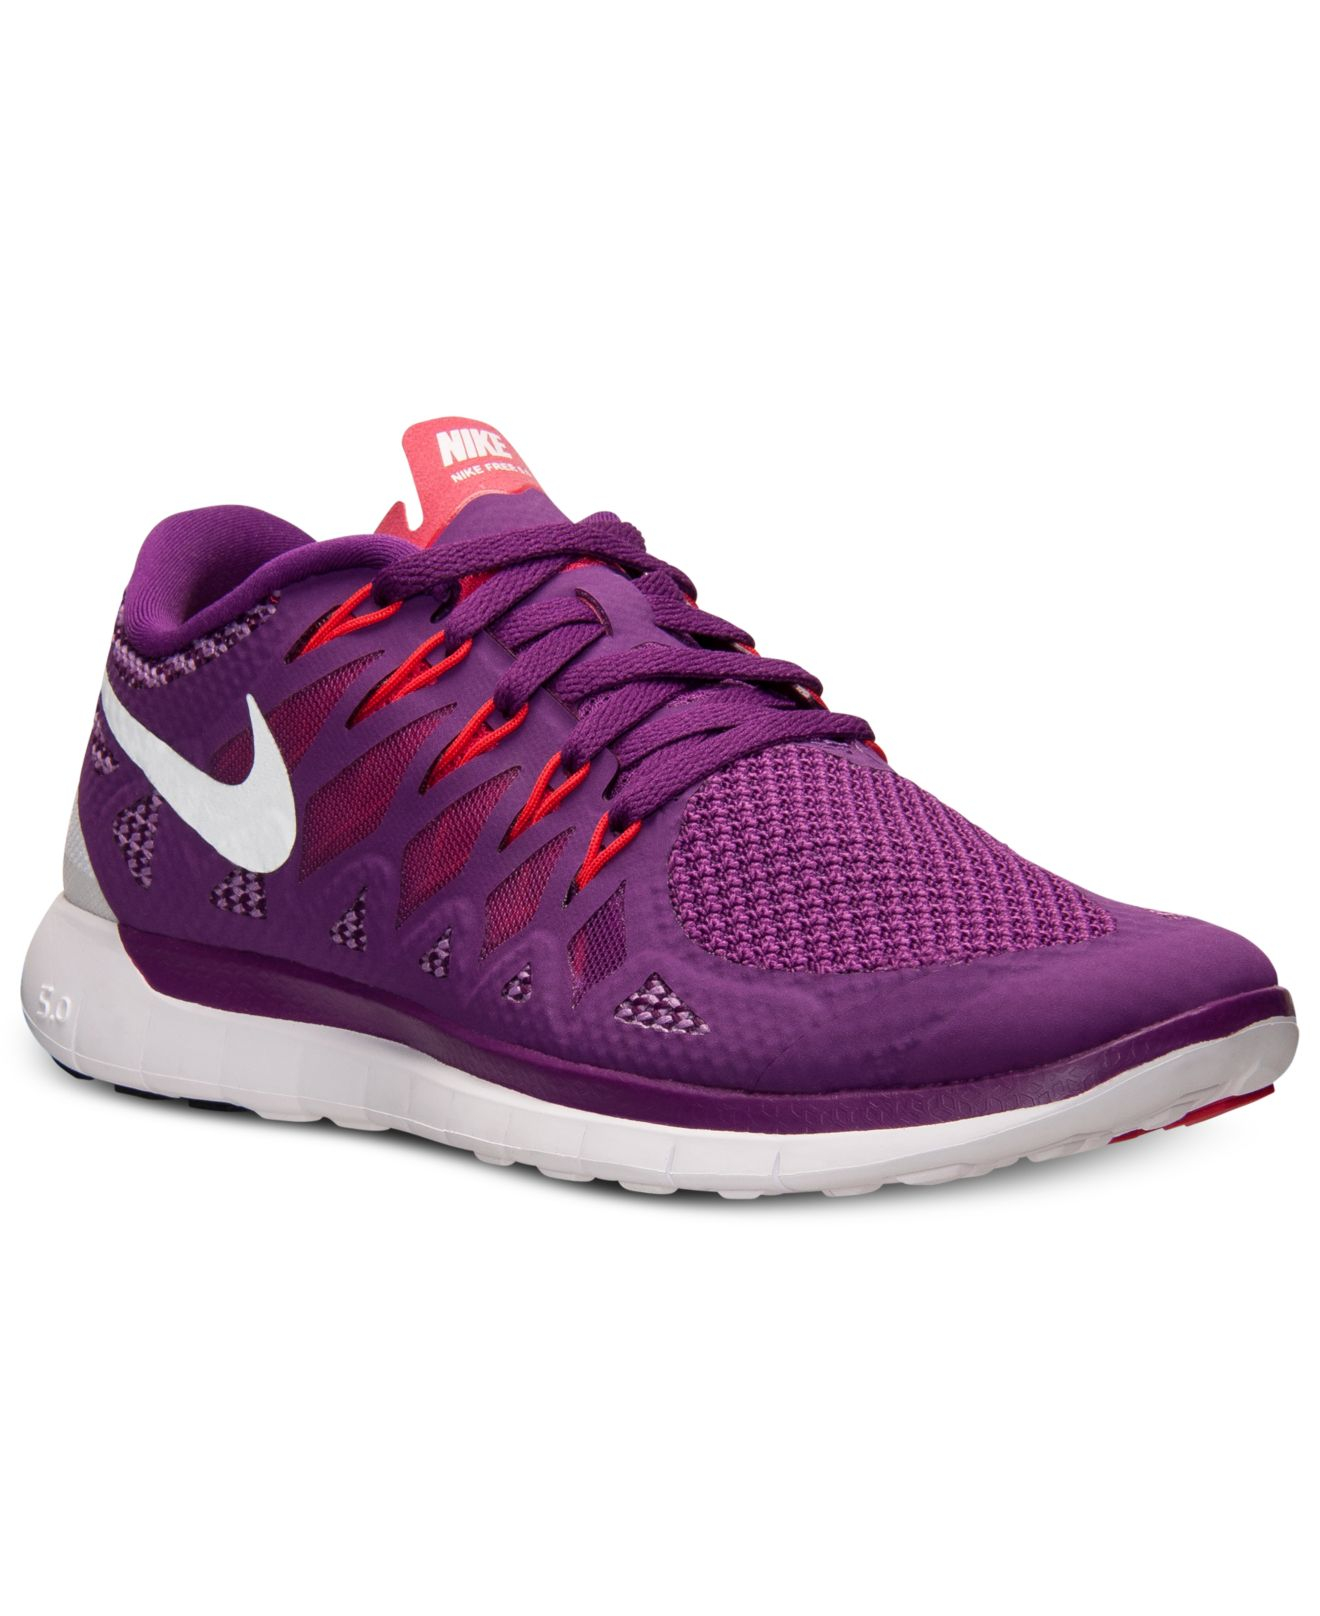 Nike Women'S Free 5.0 2014 Running Sneakers From Finish Line in Purple ...